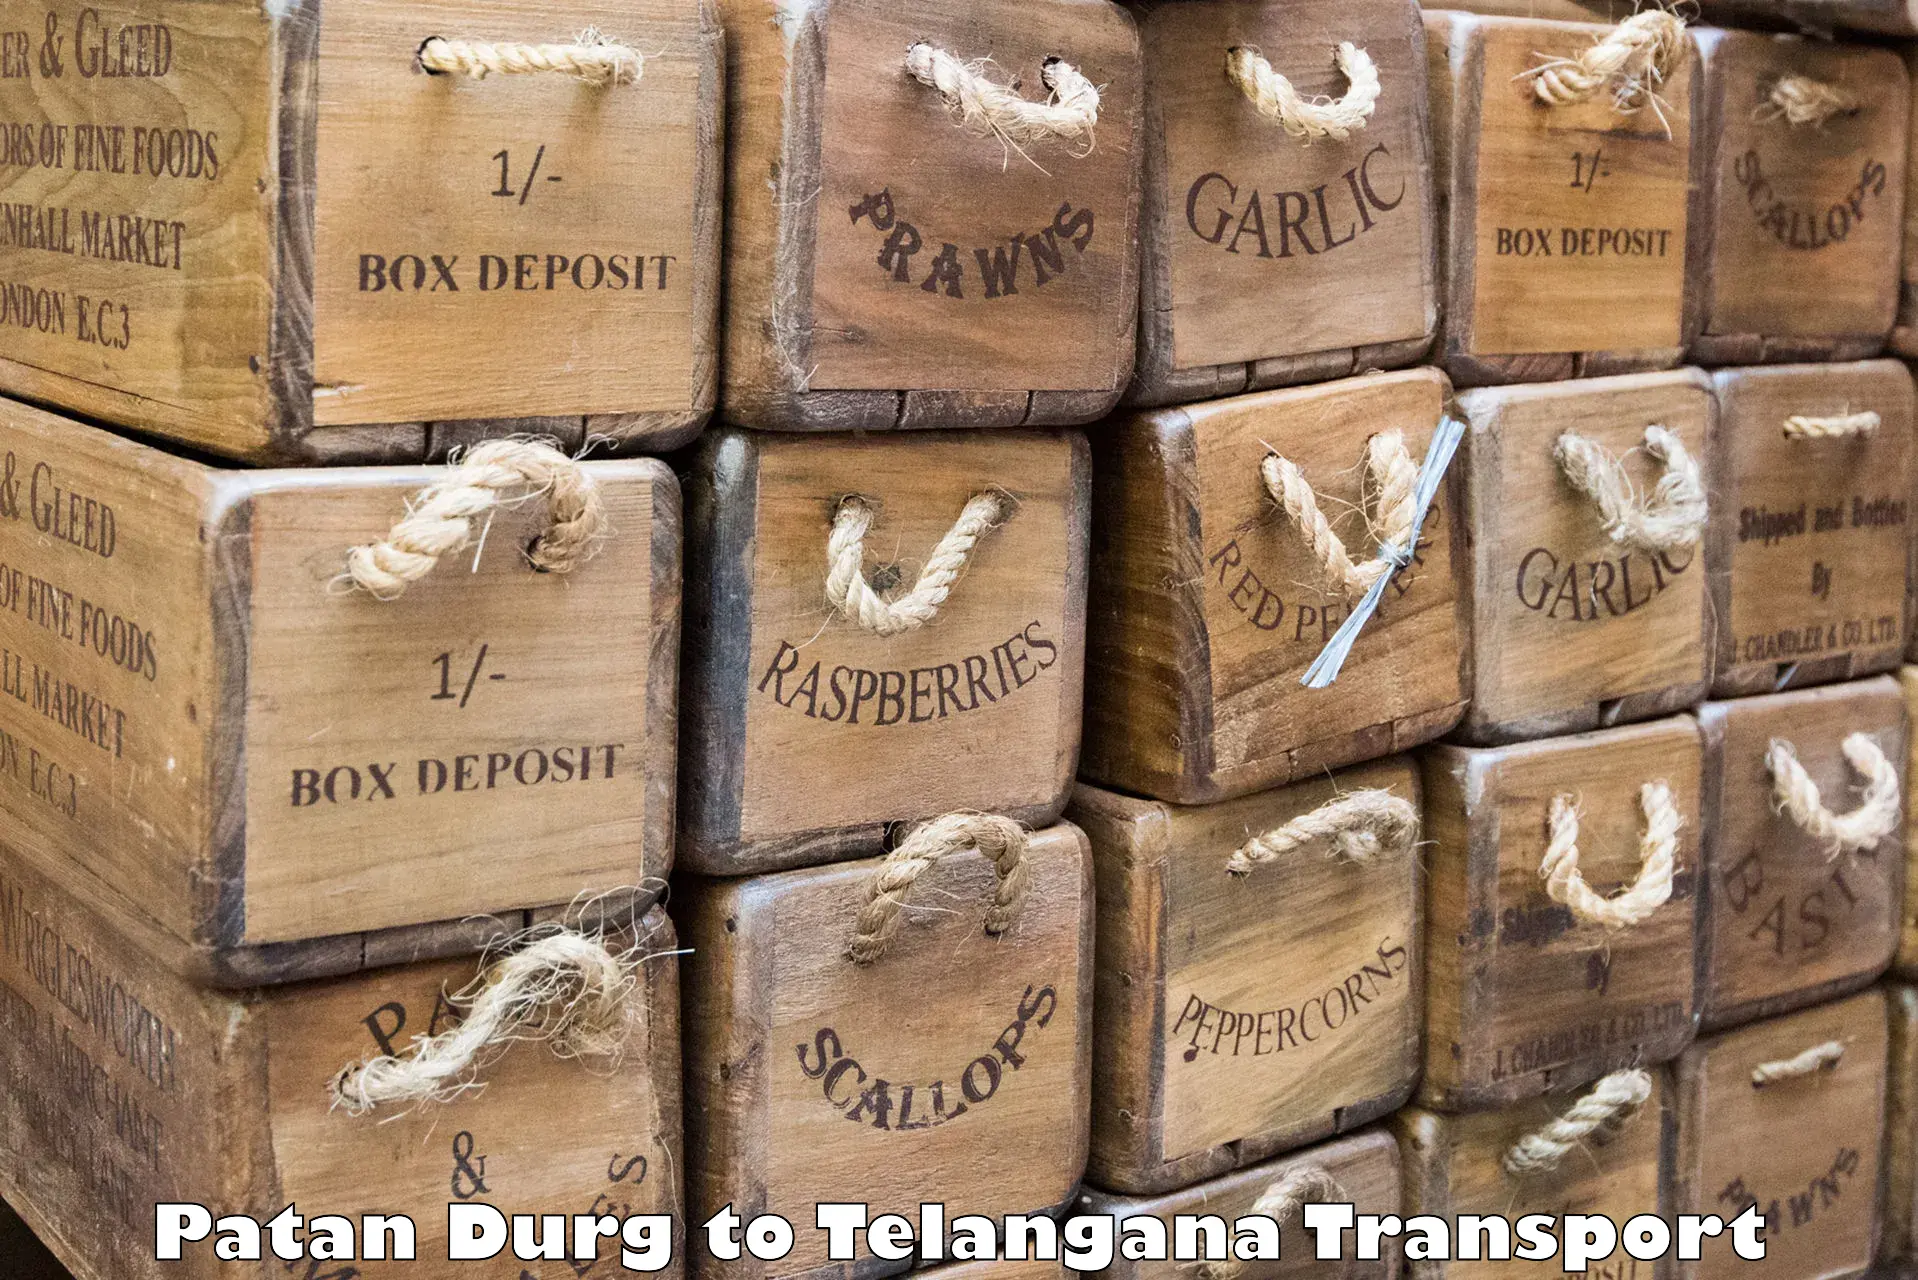 Transport in sharing Patan Durg to Pregnapur